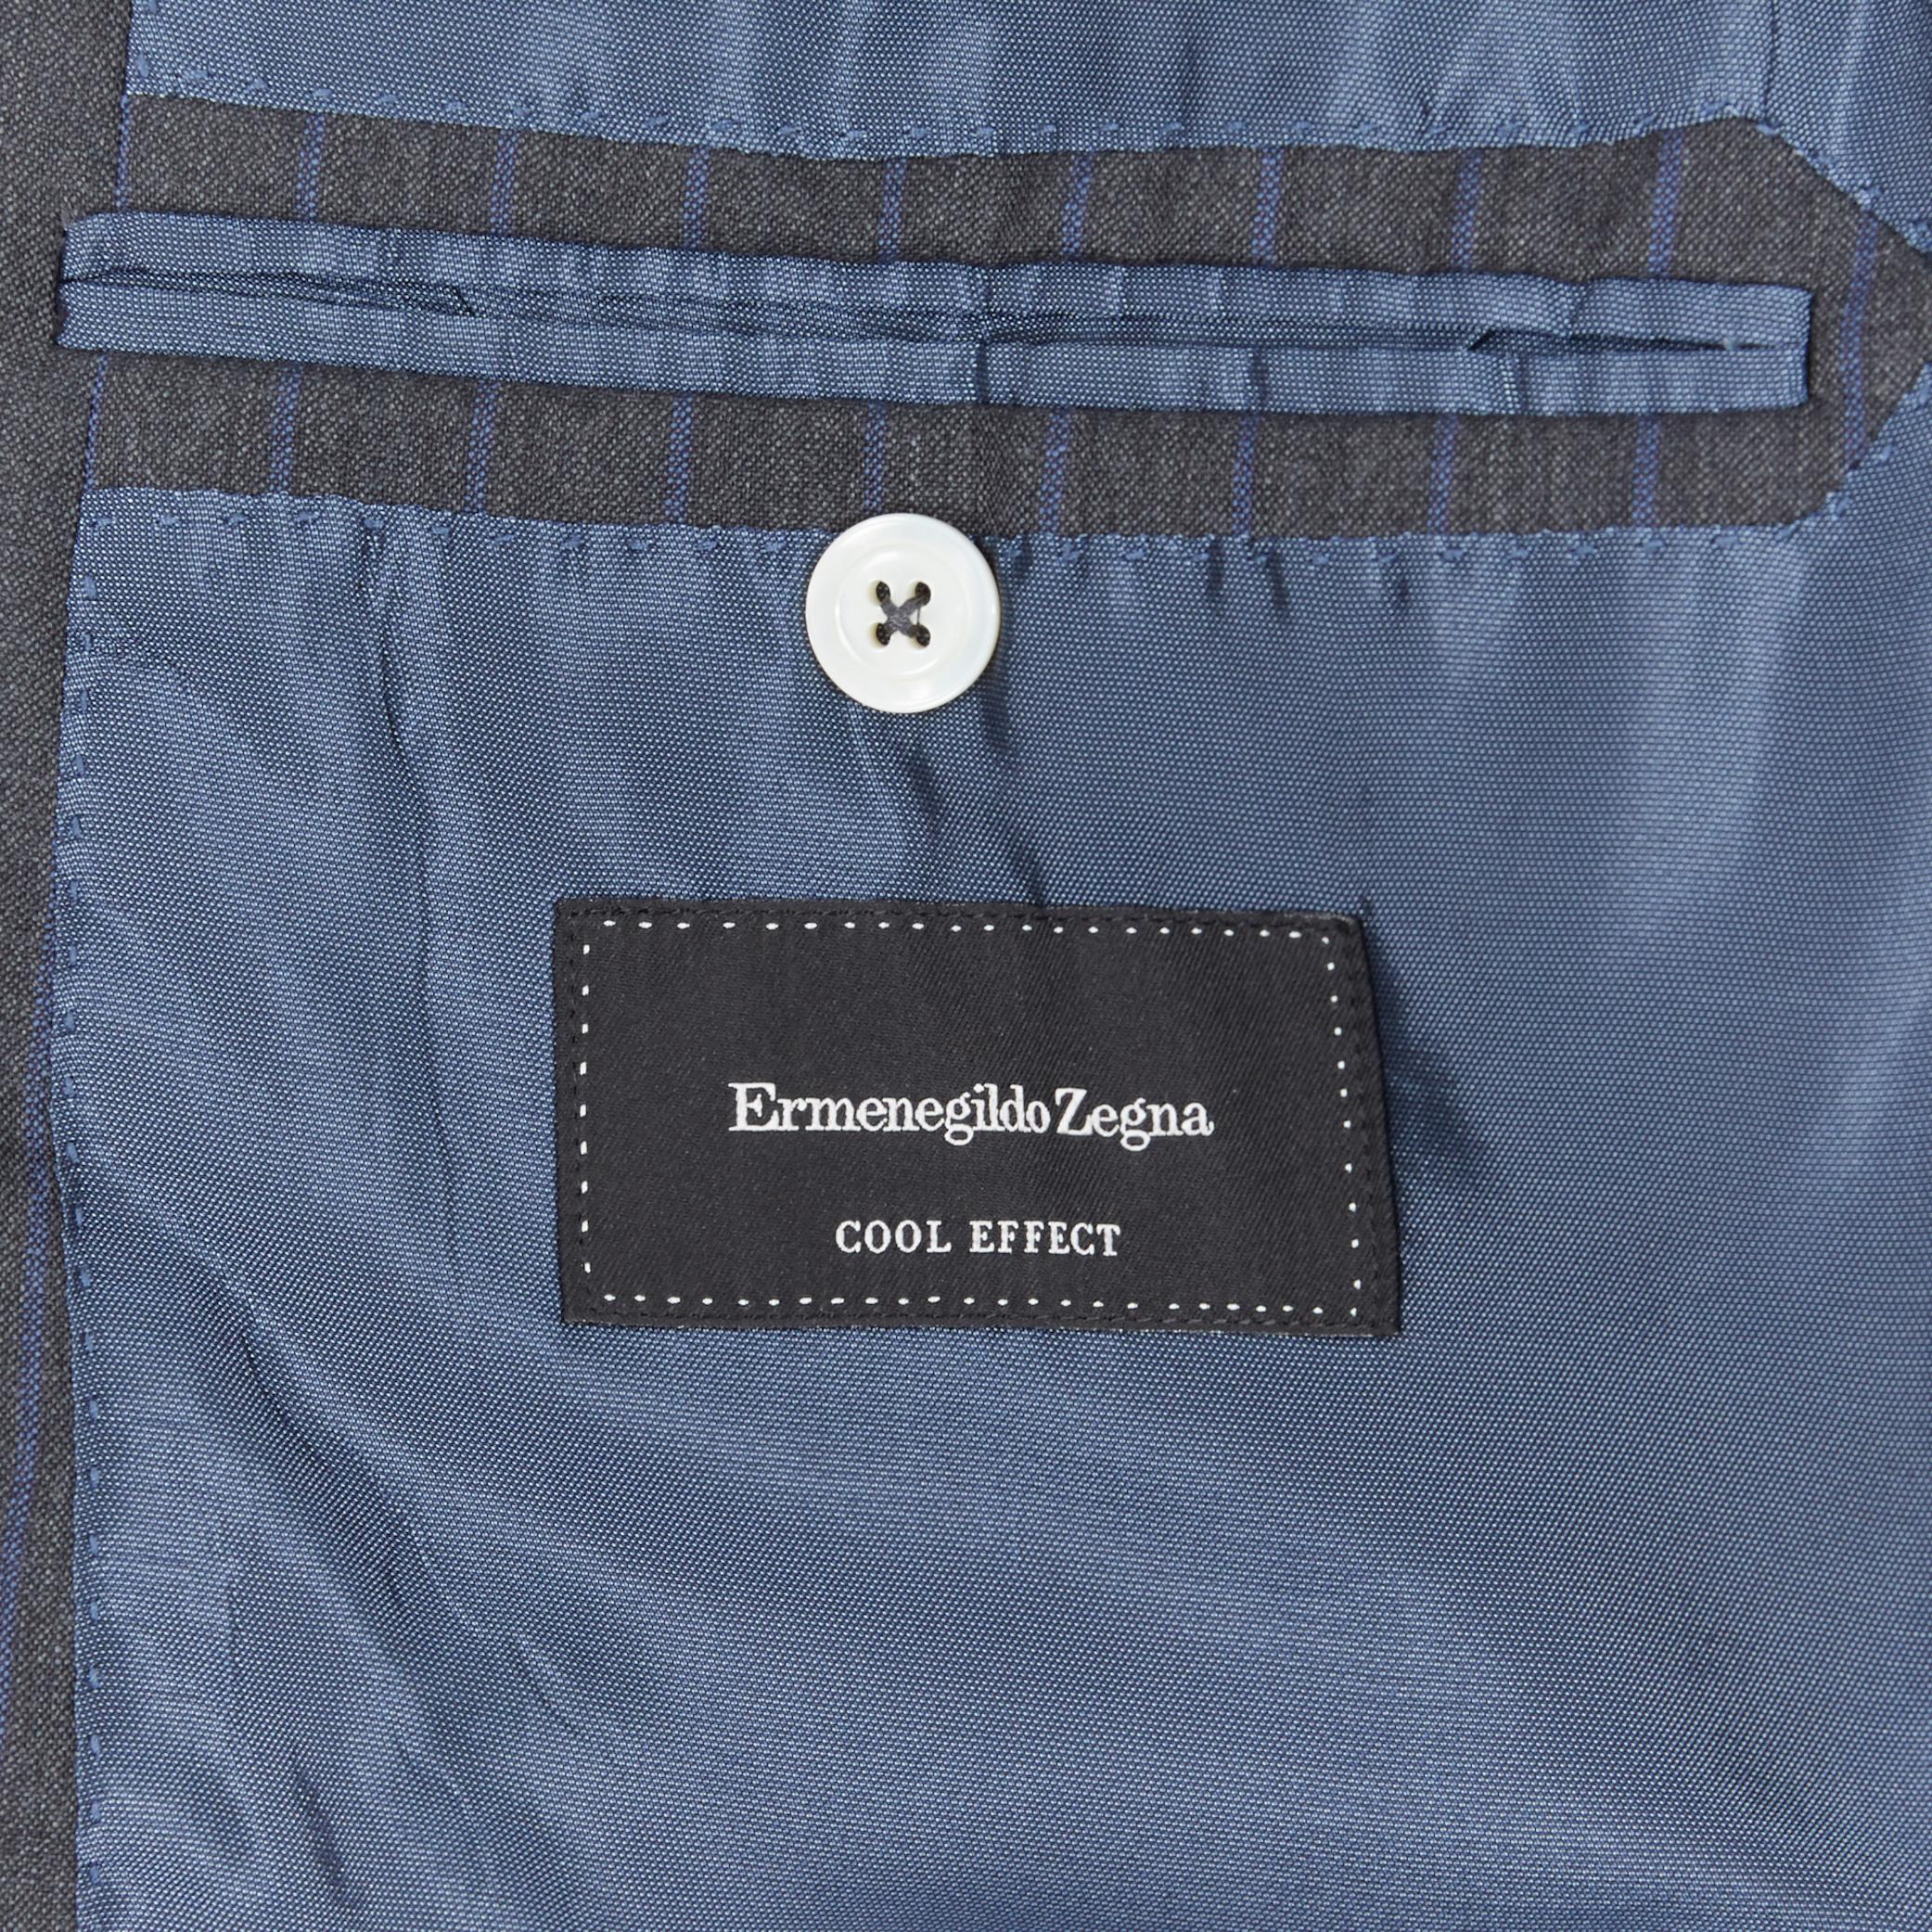 ERMENEGILDO ZEGNA Cool Effect grey blue pinstripe wool classic blazer jacket 50R 5